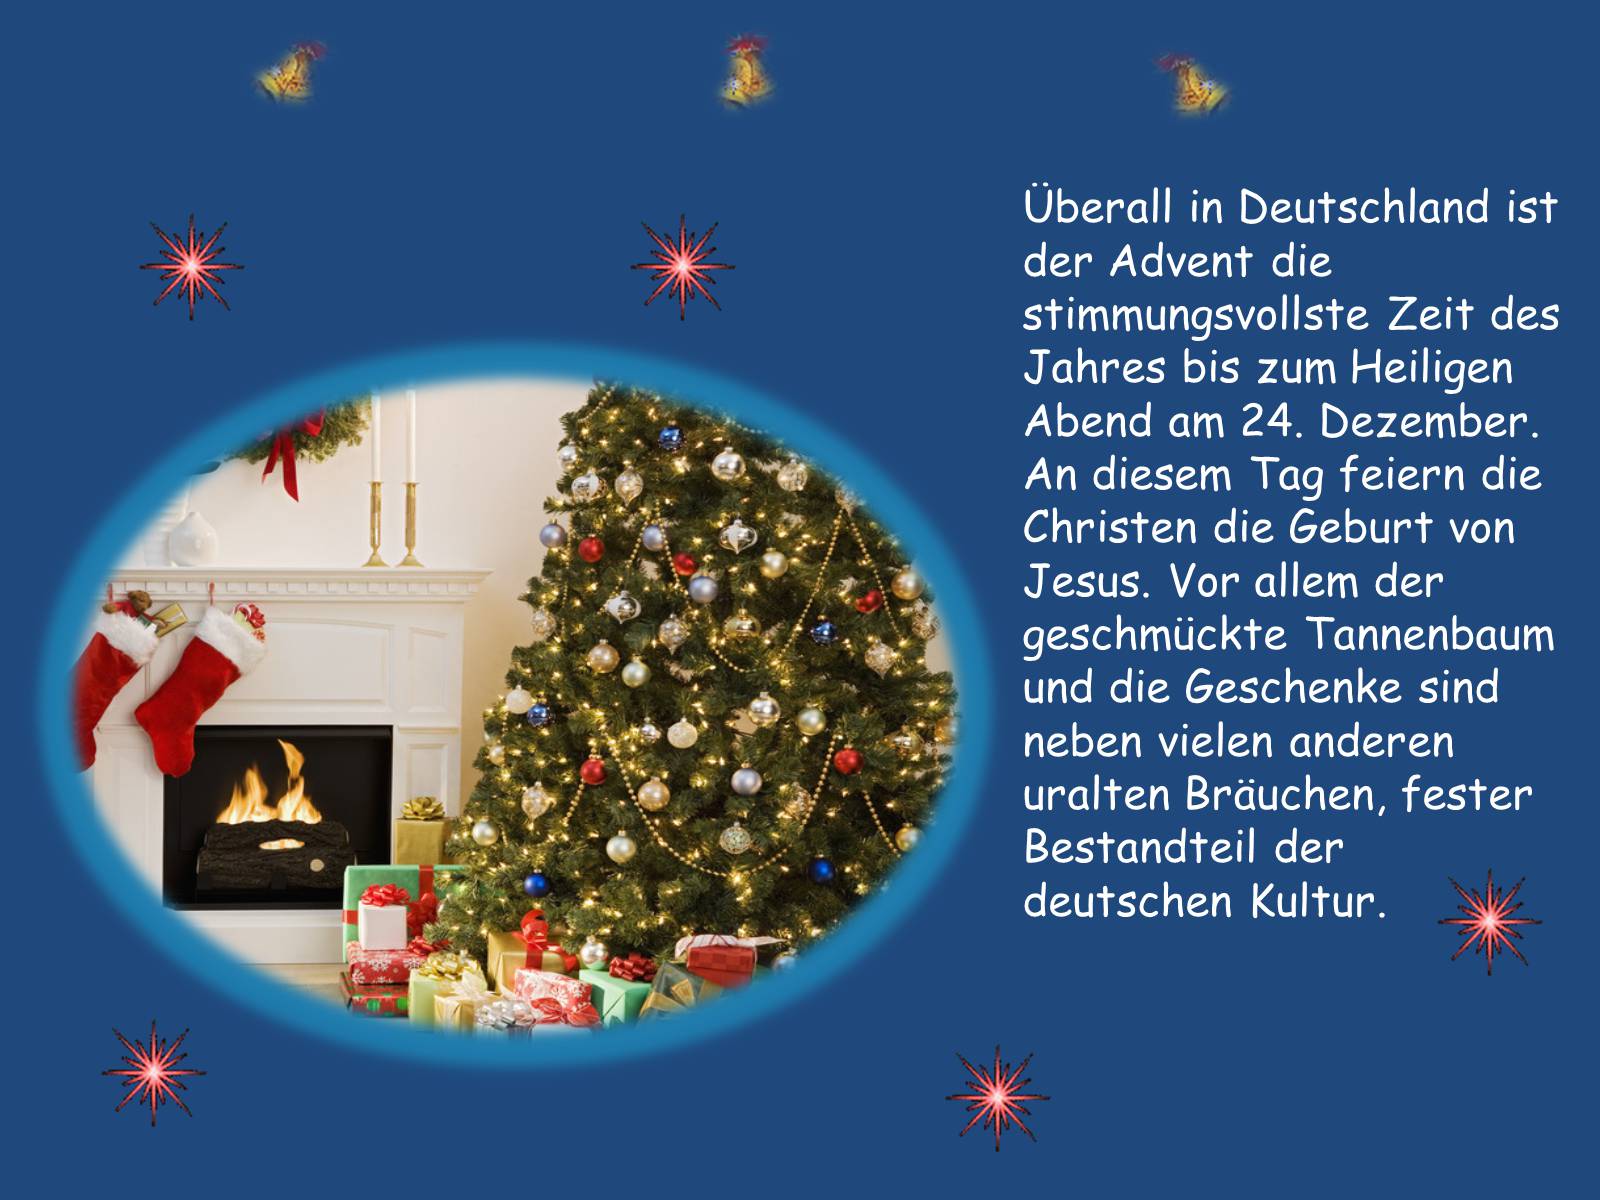 Презентація на тему «Weihnachten in Deutschland» (варіант 2) - Слайд #2